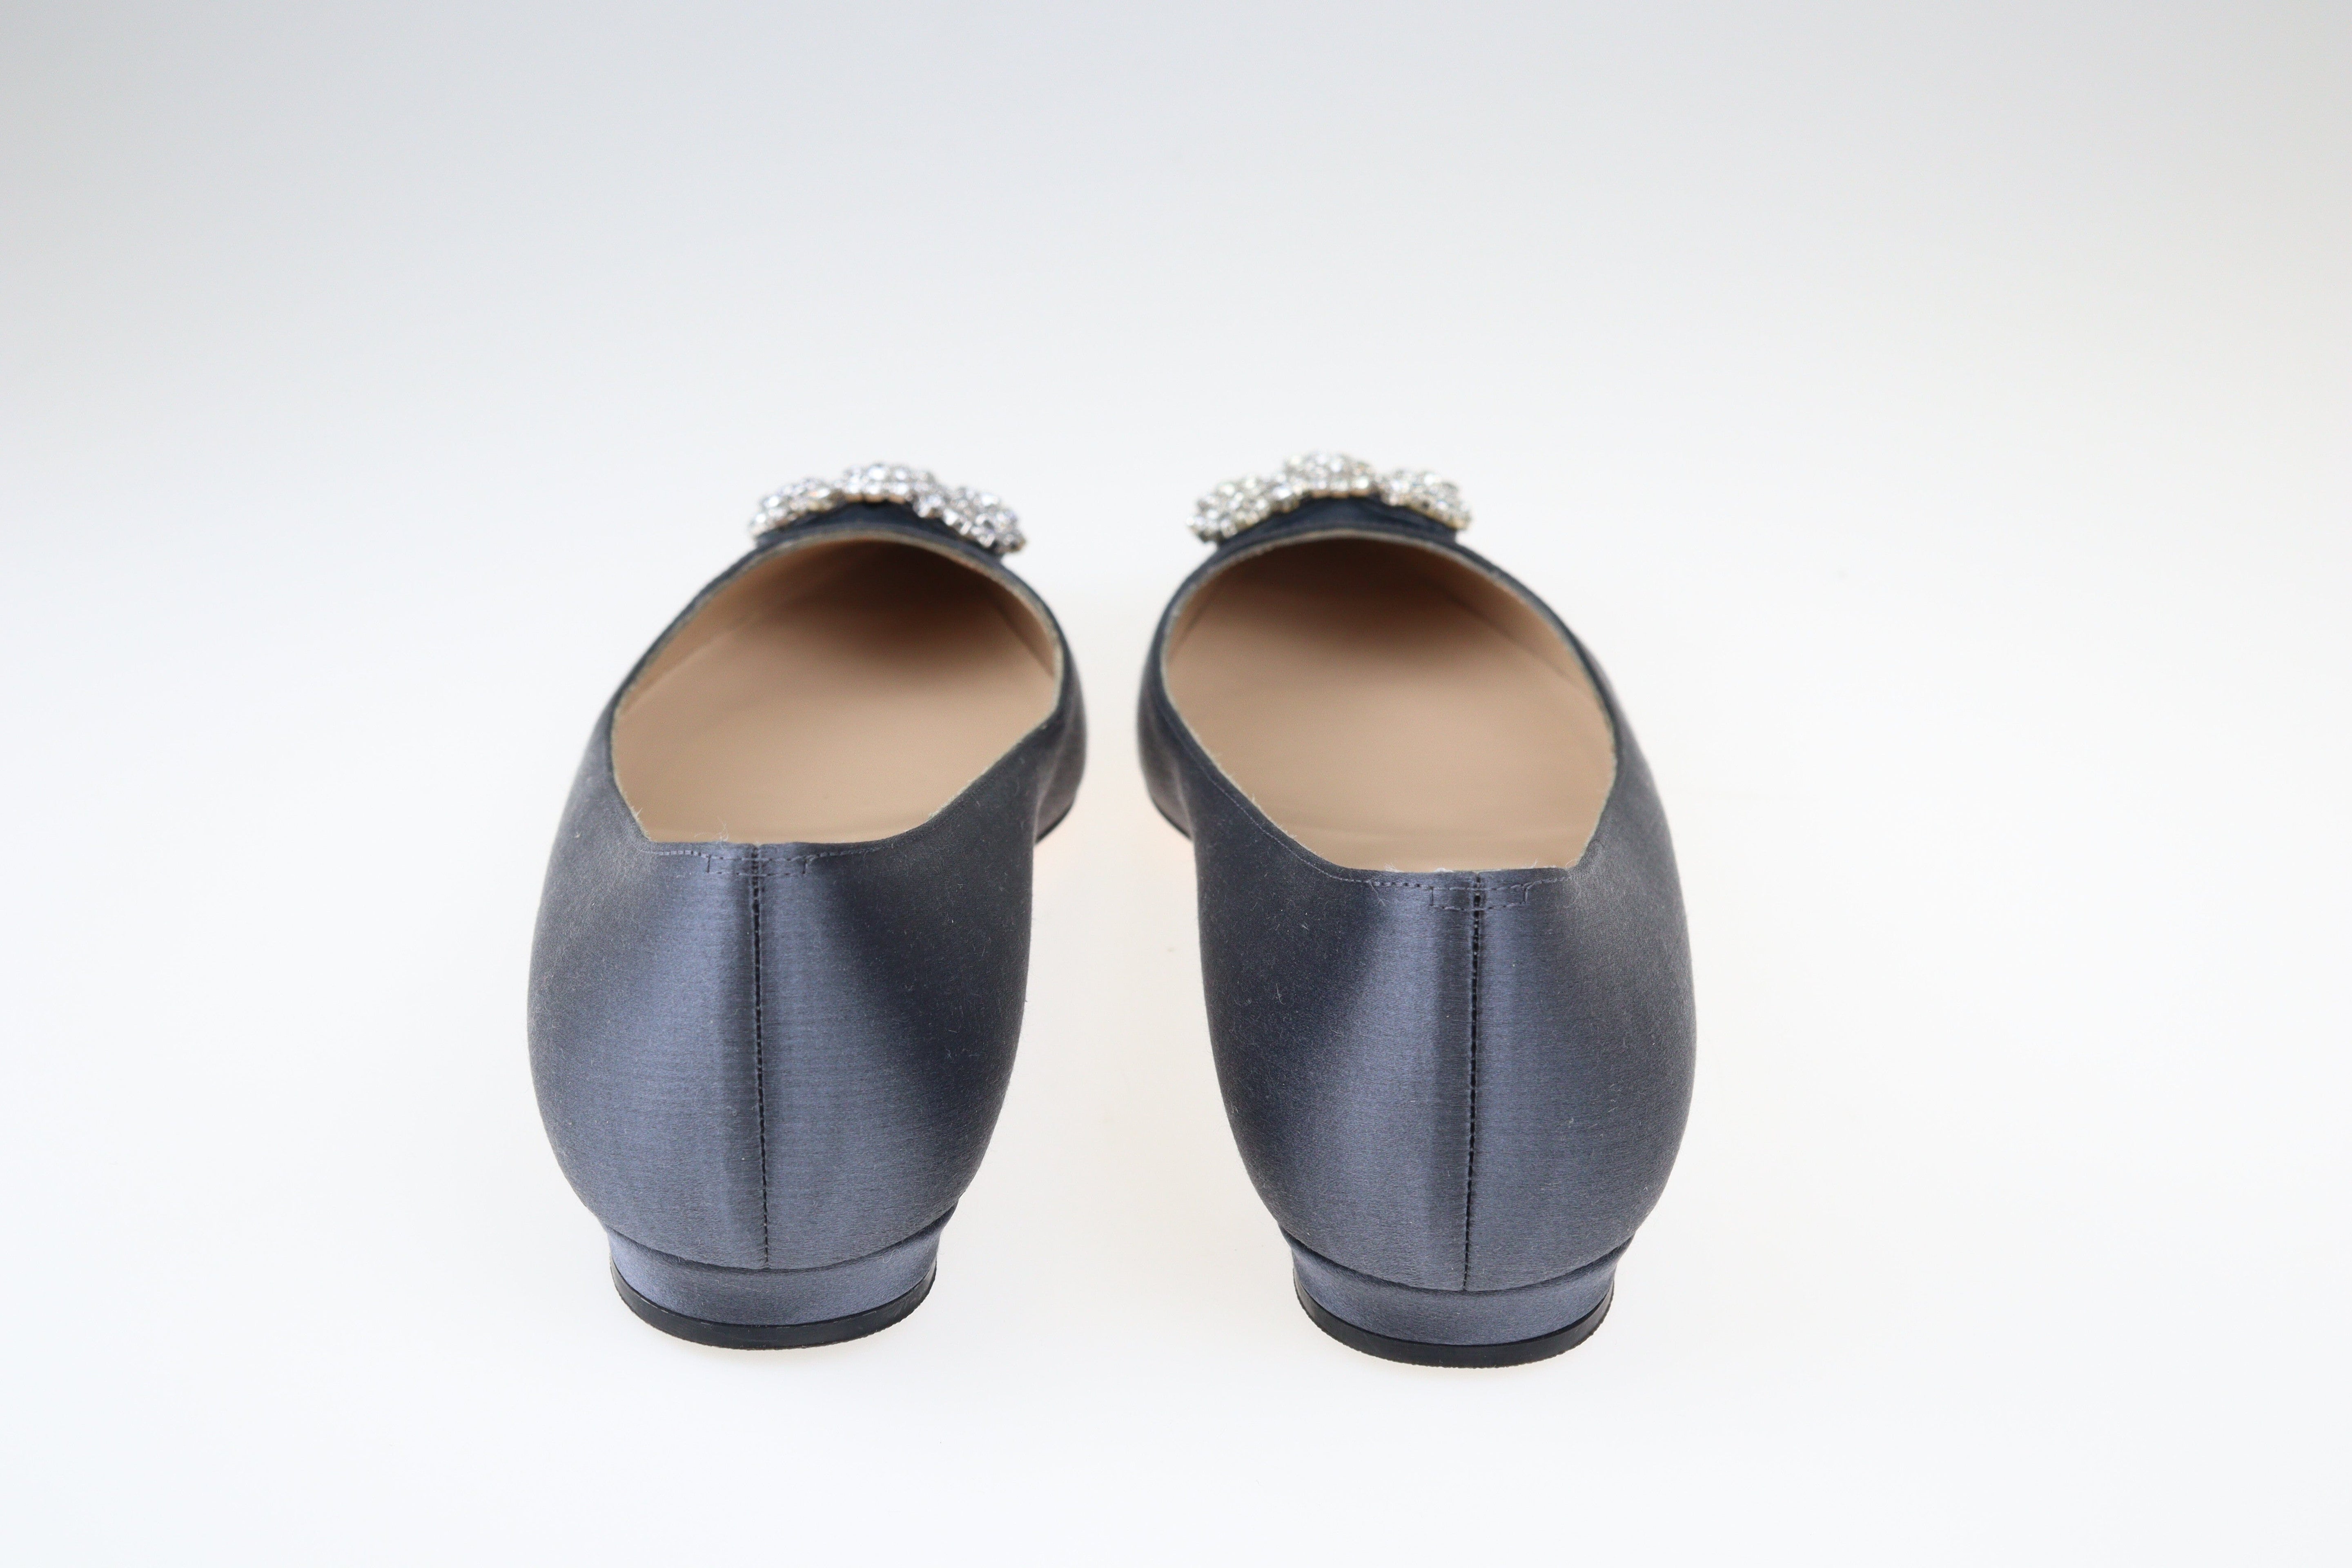 Dark Grey Hangisi Ballets Flats Shoes Manolo Blahnik 